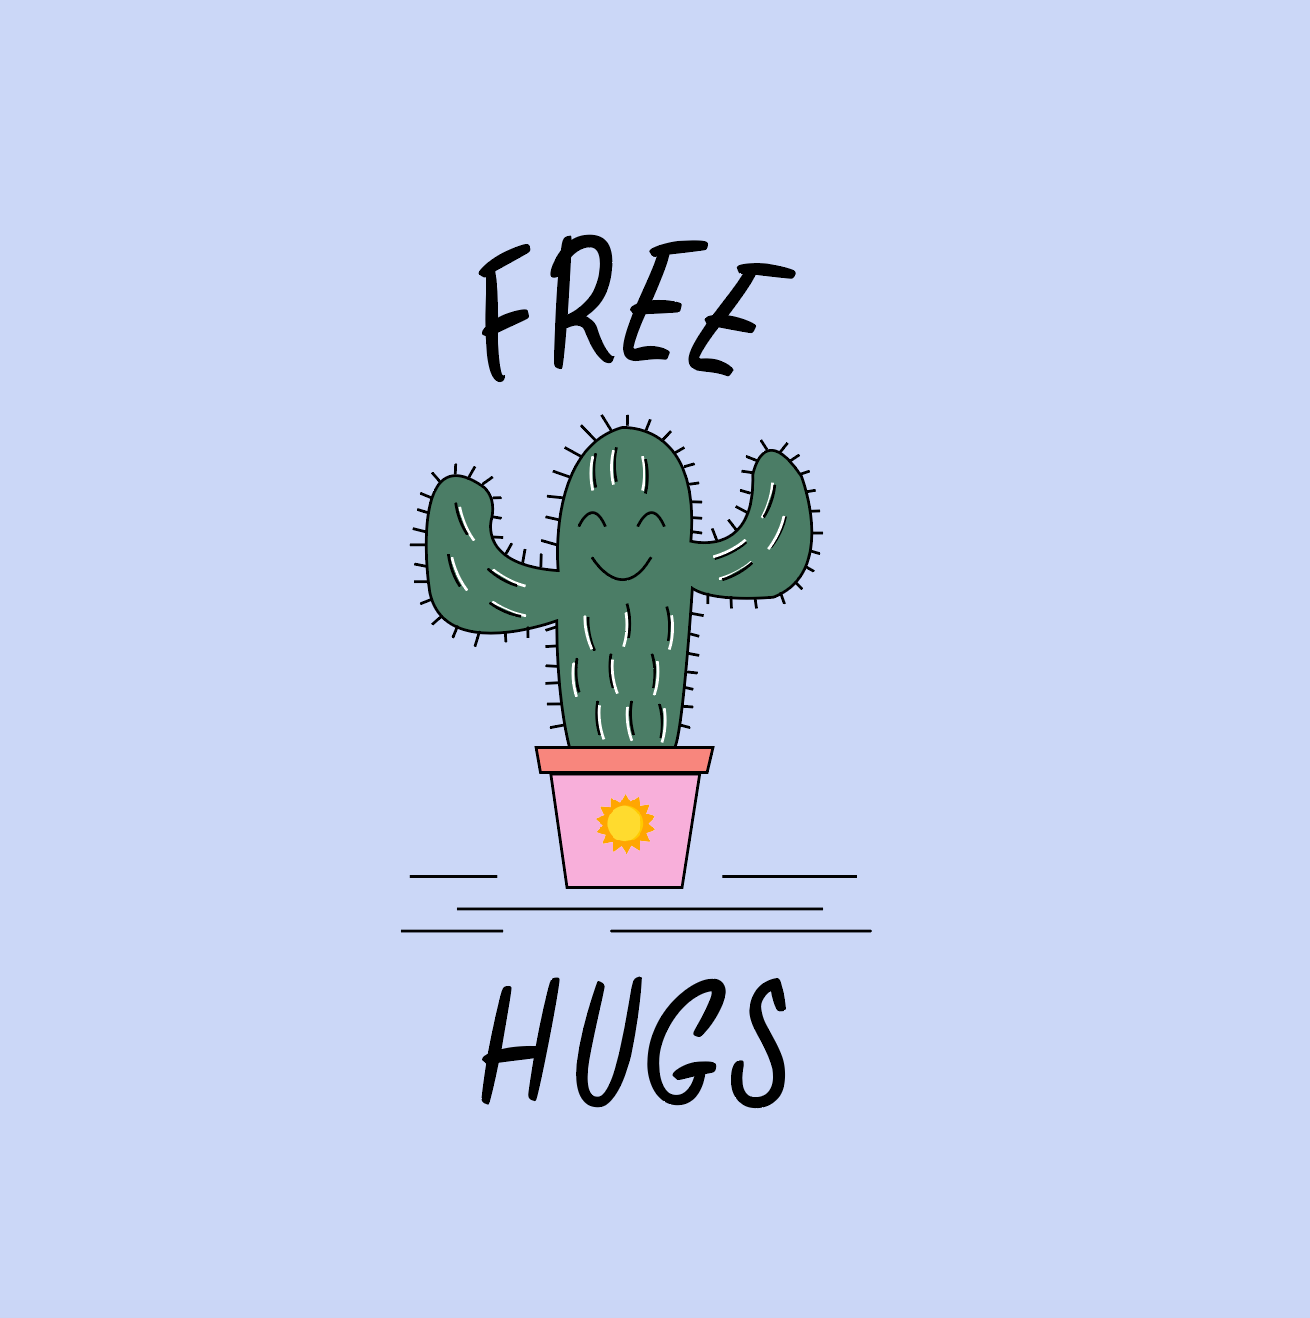 Free Hugs - Kid Organic Cotton Tee